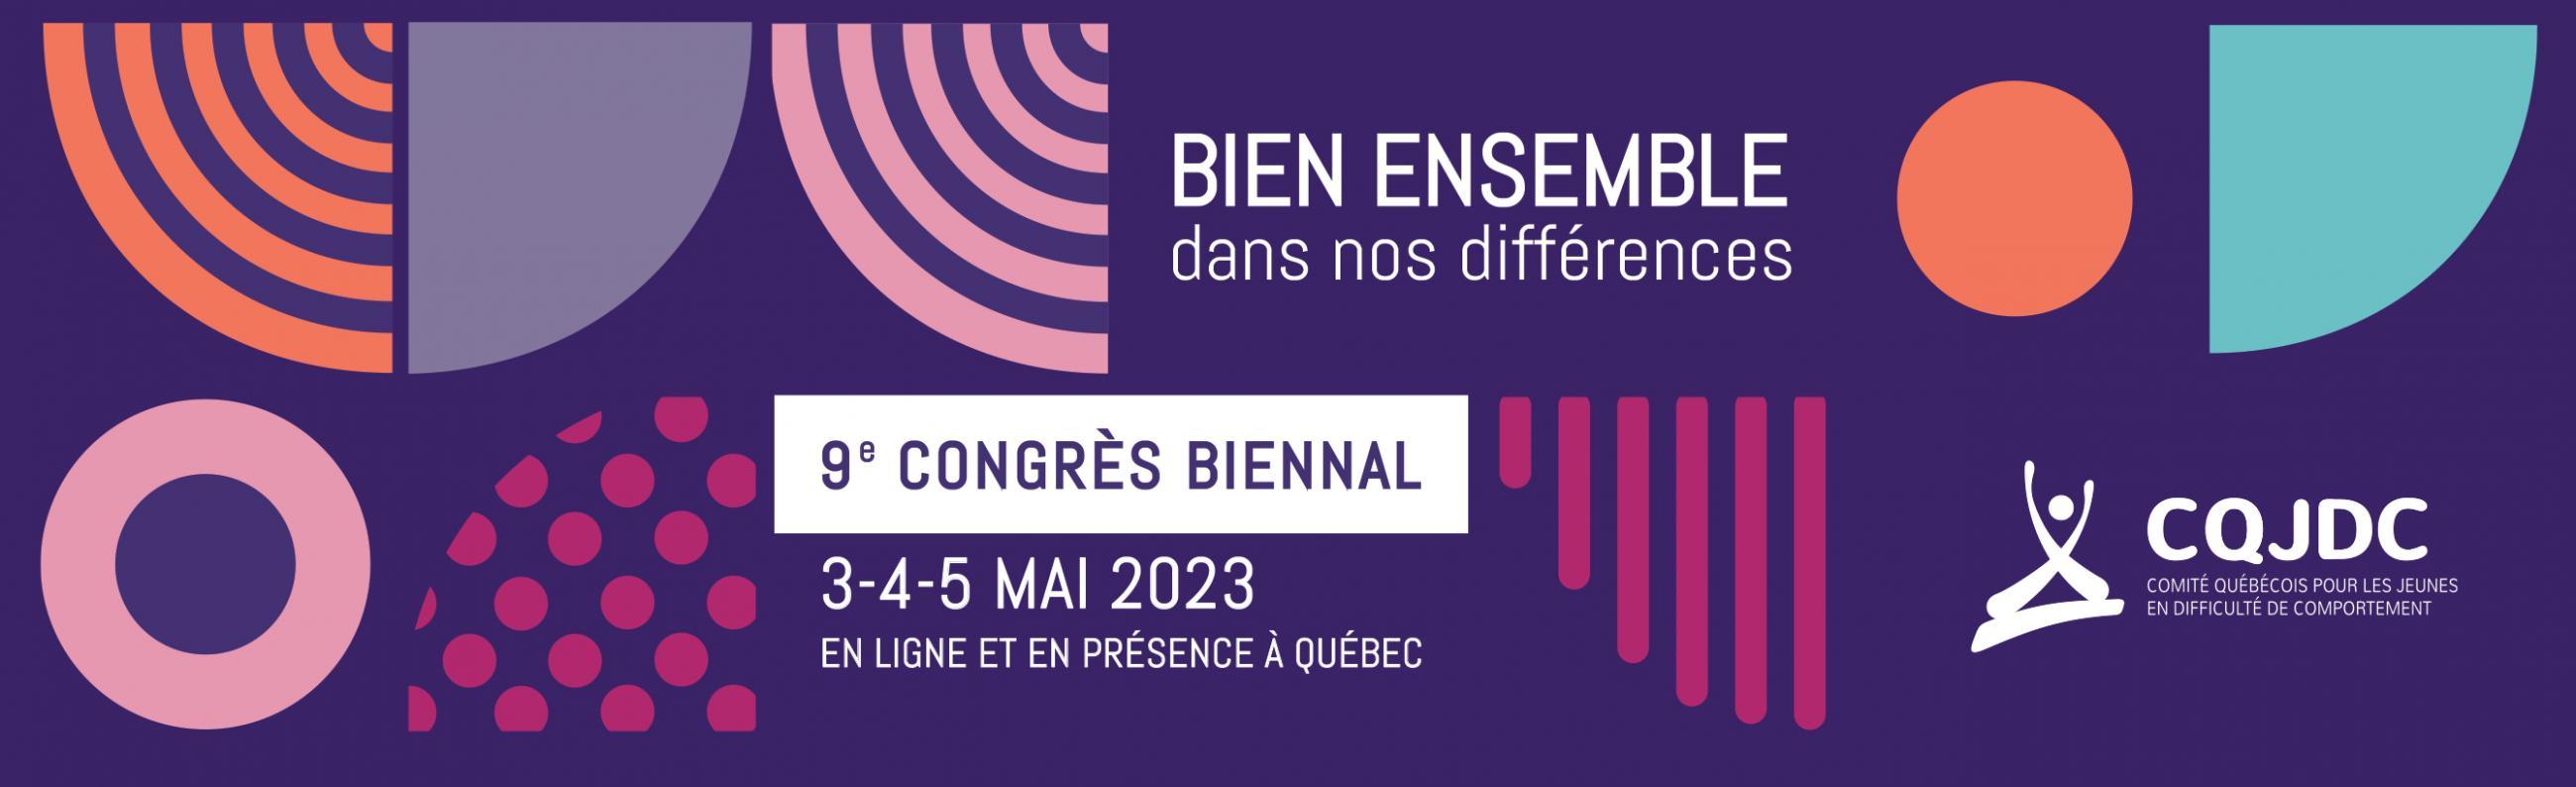 CQJDC 2023 - 9e congrès biennal